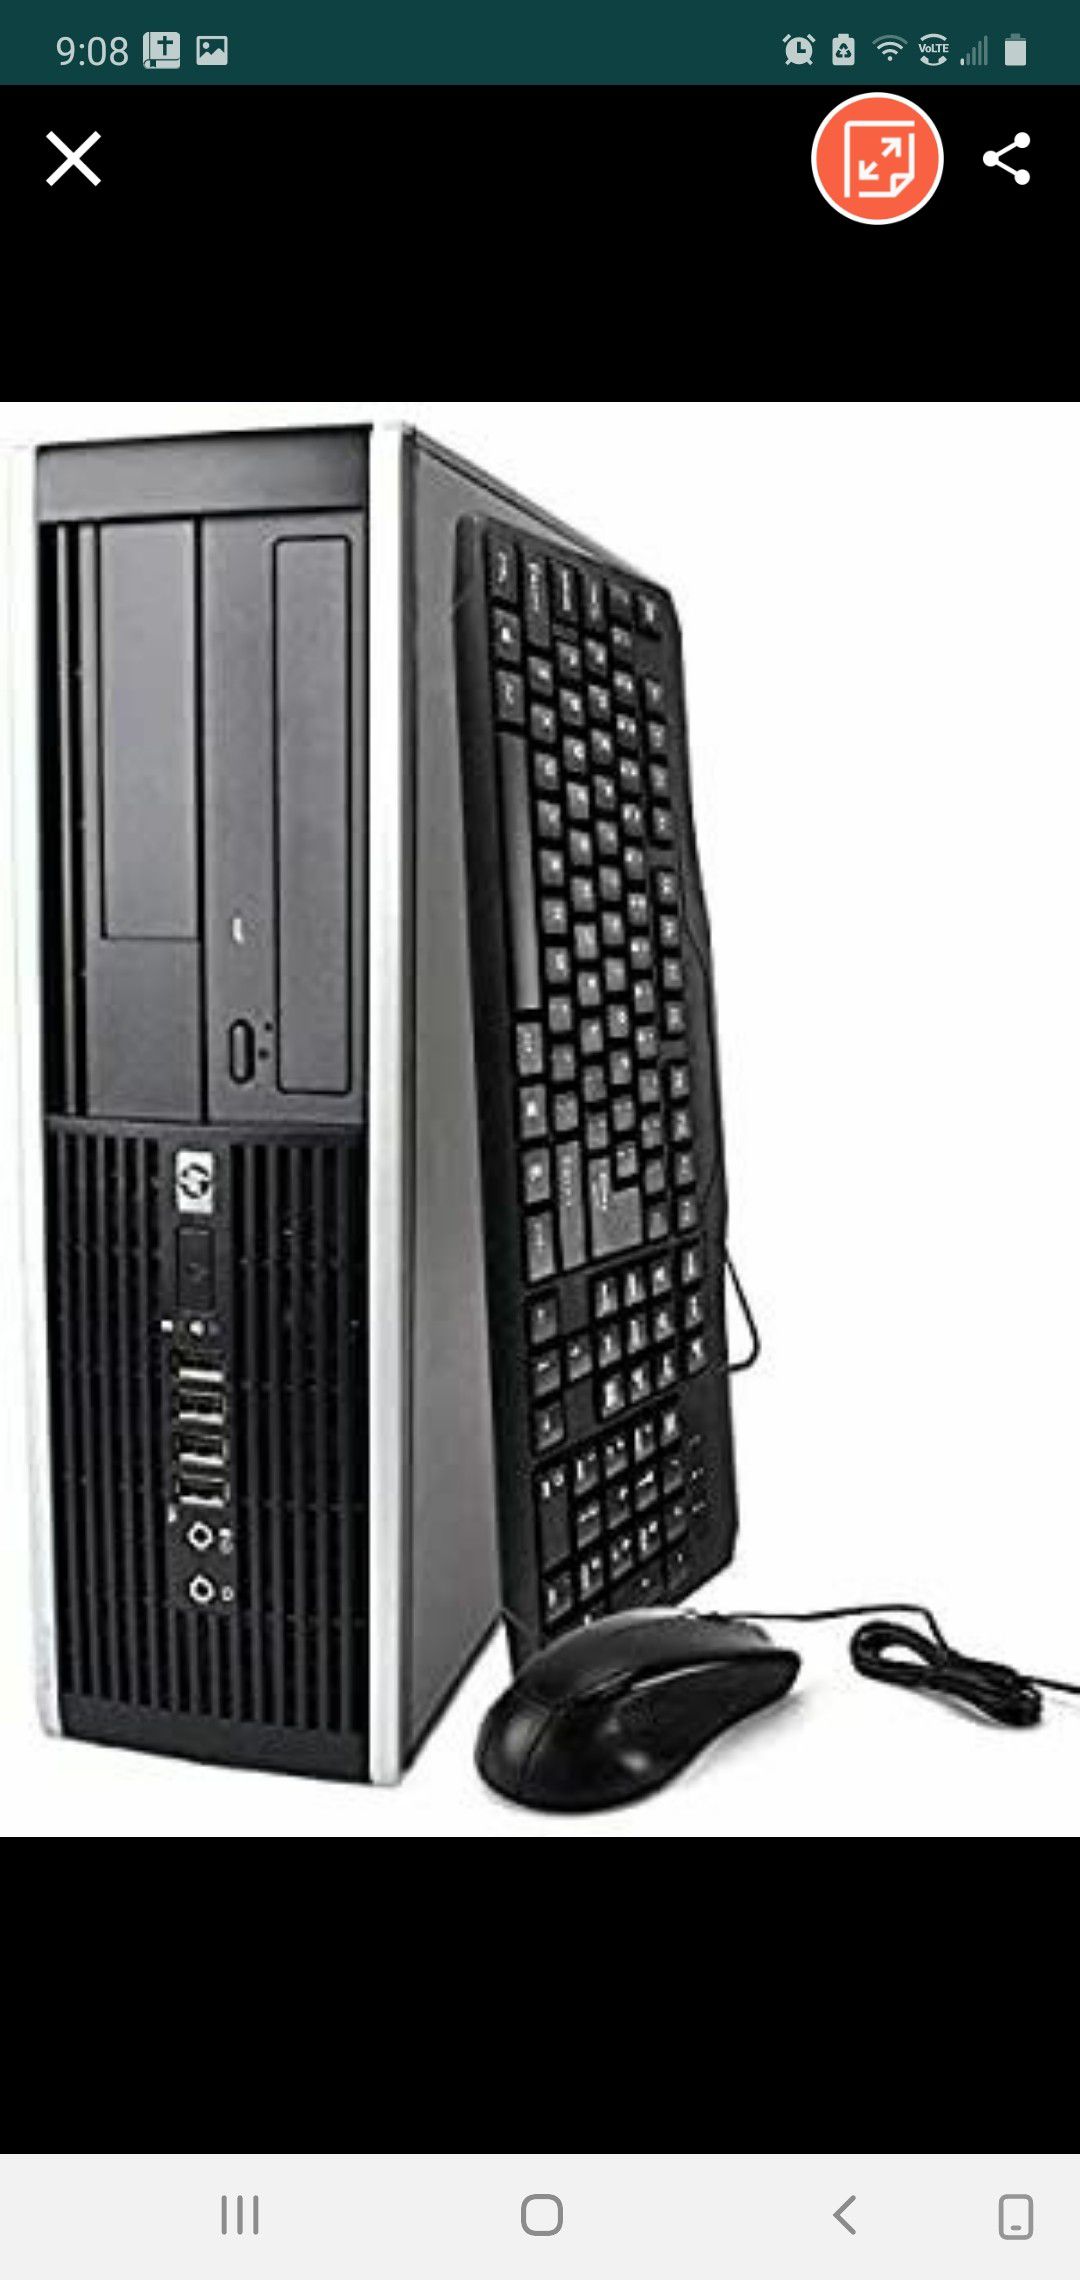 HP Elite 6300 SFF Business Computer, Intel Quad-Core i7-3770 up to 3.9Ghz CPU, 8GB RAM, 160hd, DVD, USB 3.0, Windows 10 Professional